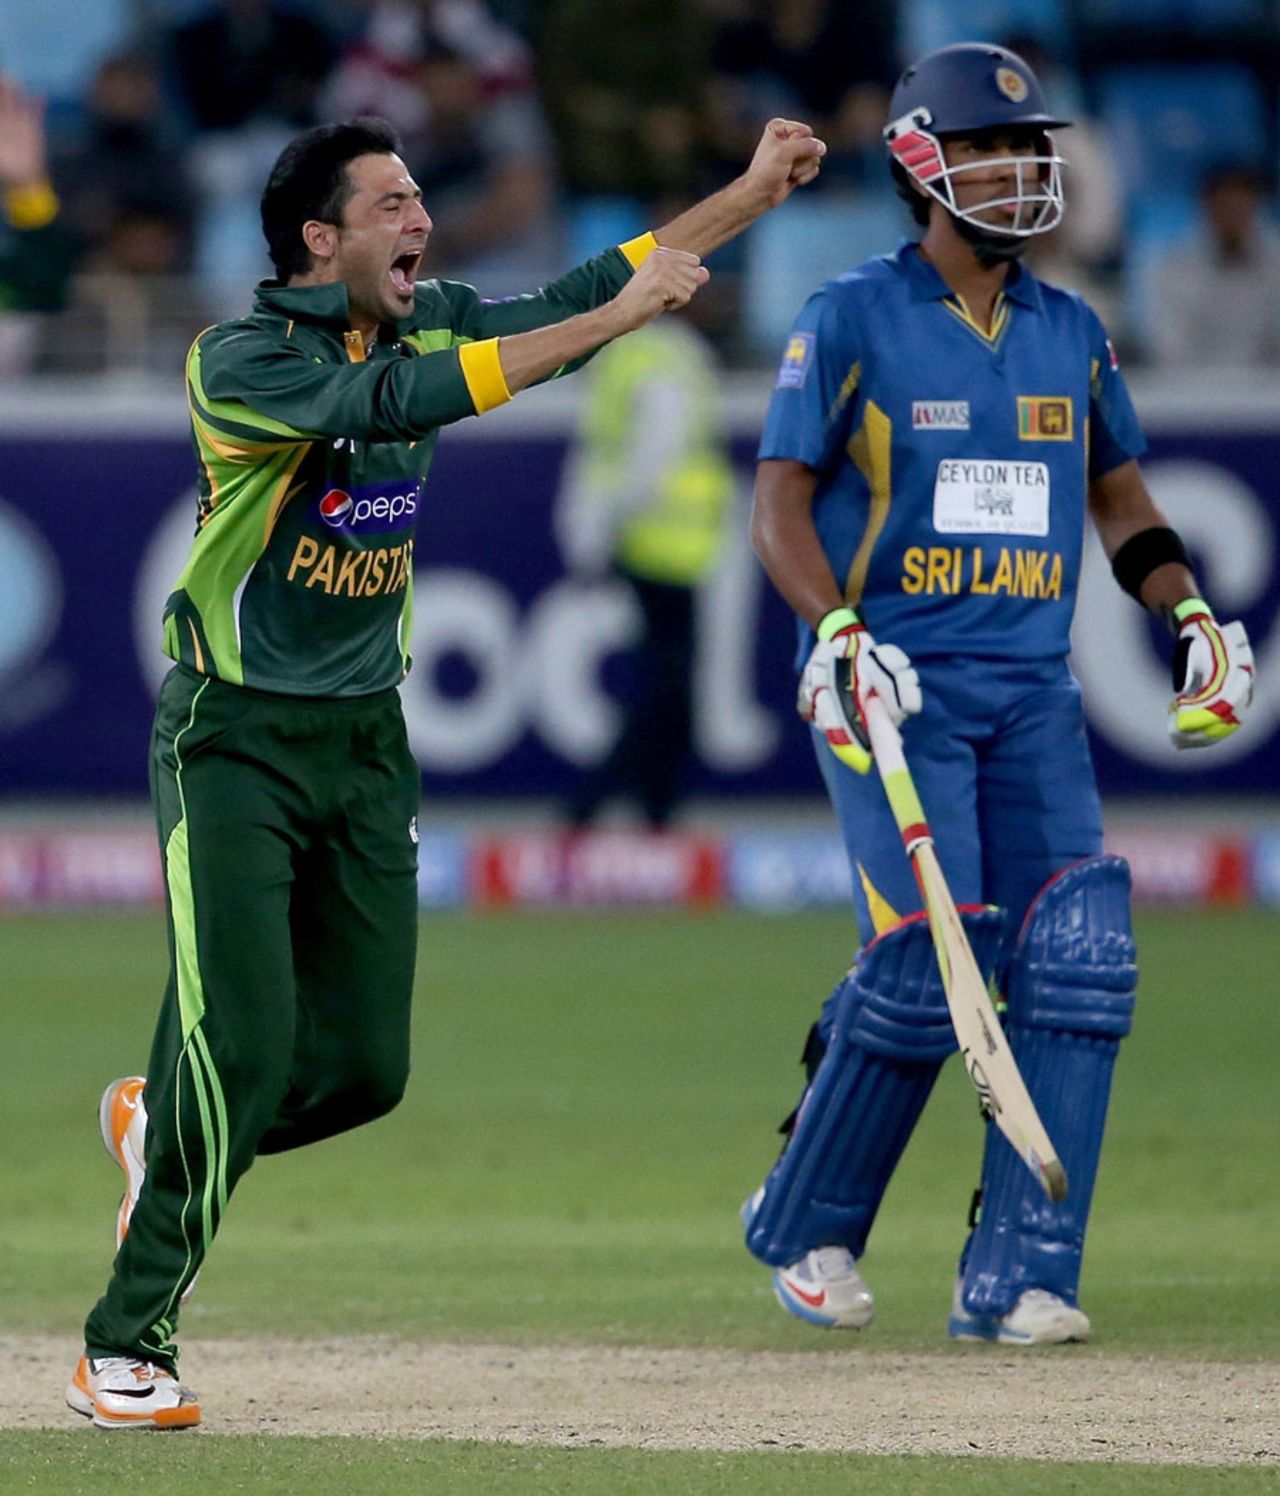 Junaid Khan is delighted after taking a wicket, Pakistan v Sri Lanka, 2nd ODI, Dubai, December 20, 2013